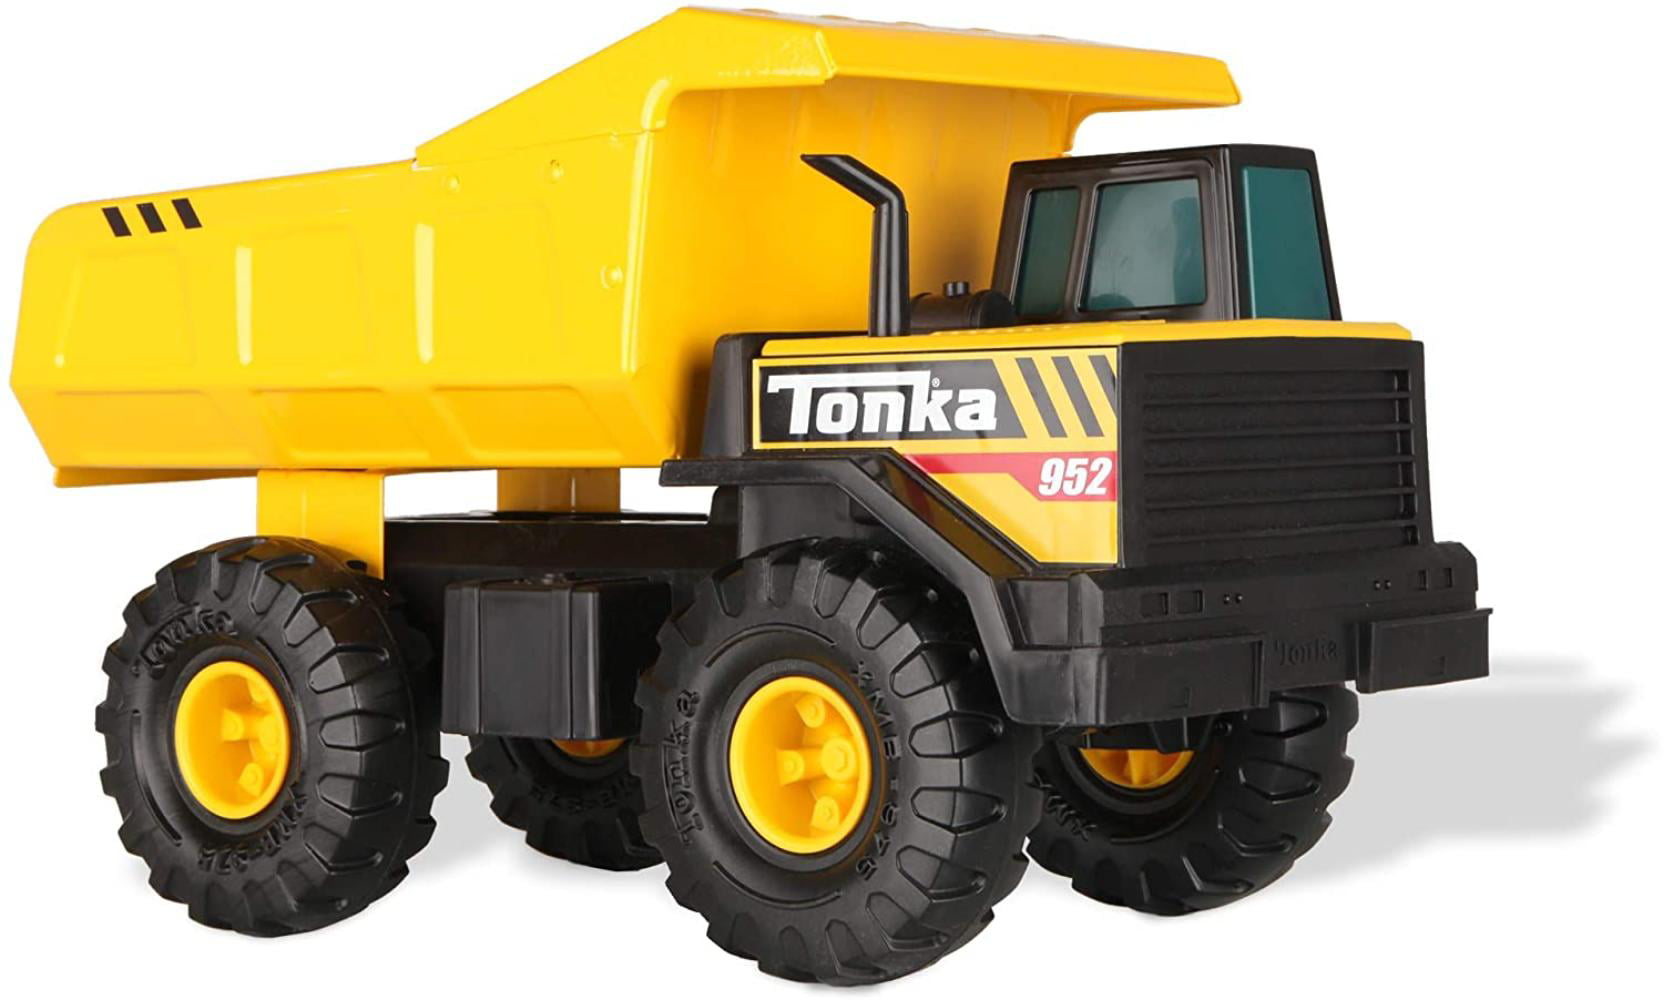 Tonka Steel Classics Mighty Dump Truck The Tonka Steel Classics Images And Photos Finder